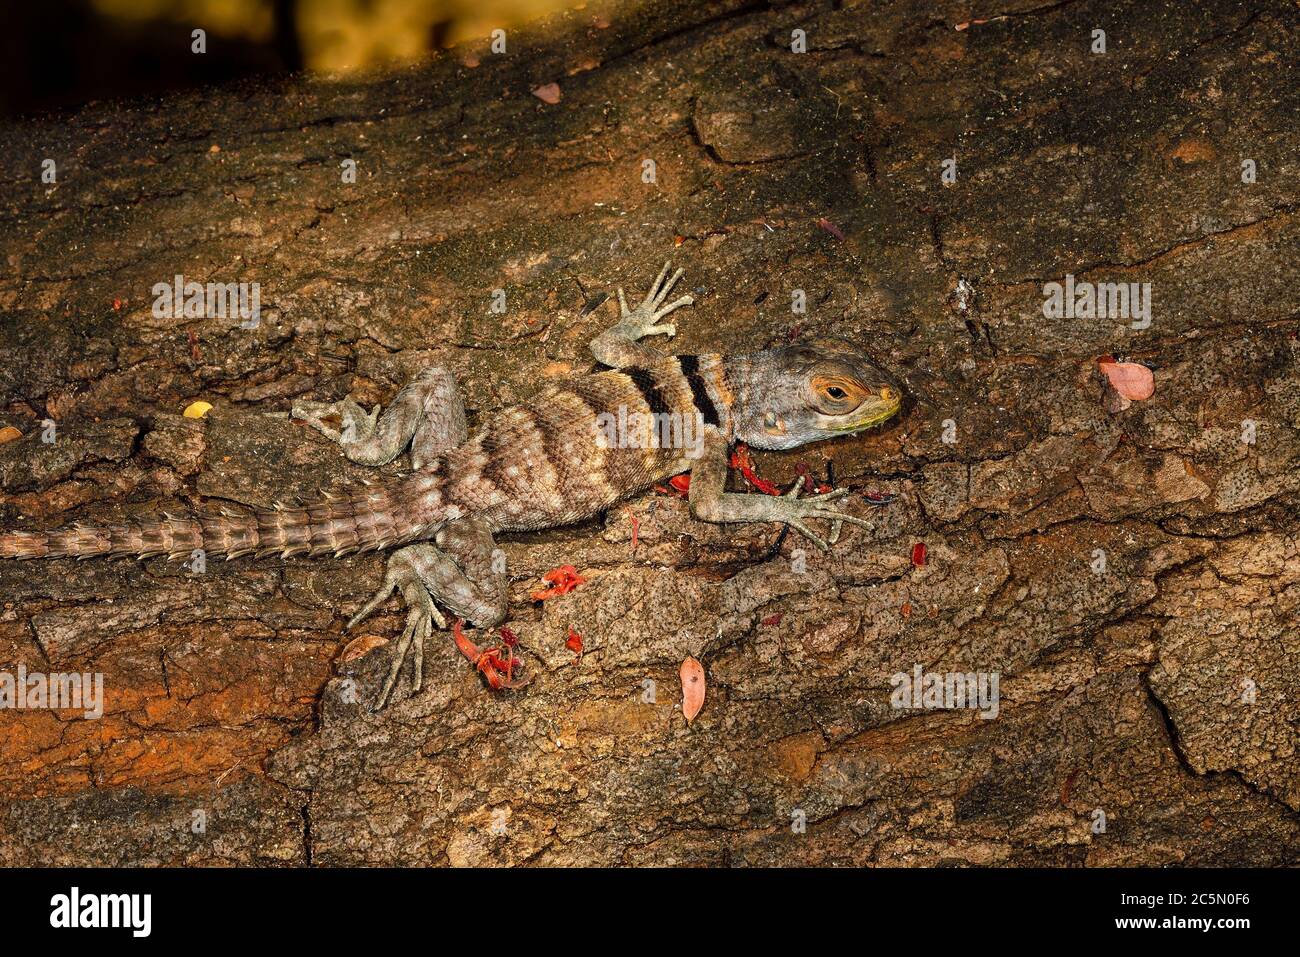 Madagascan collared iguana Stock Photo